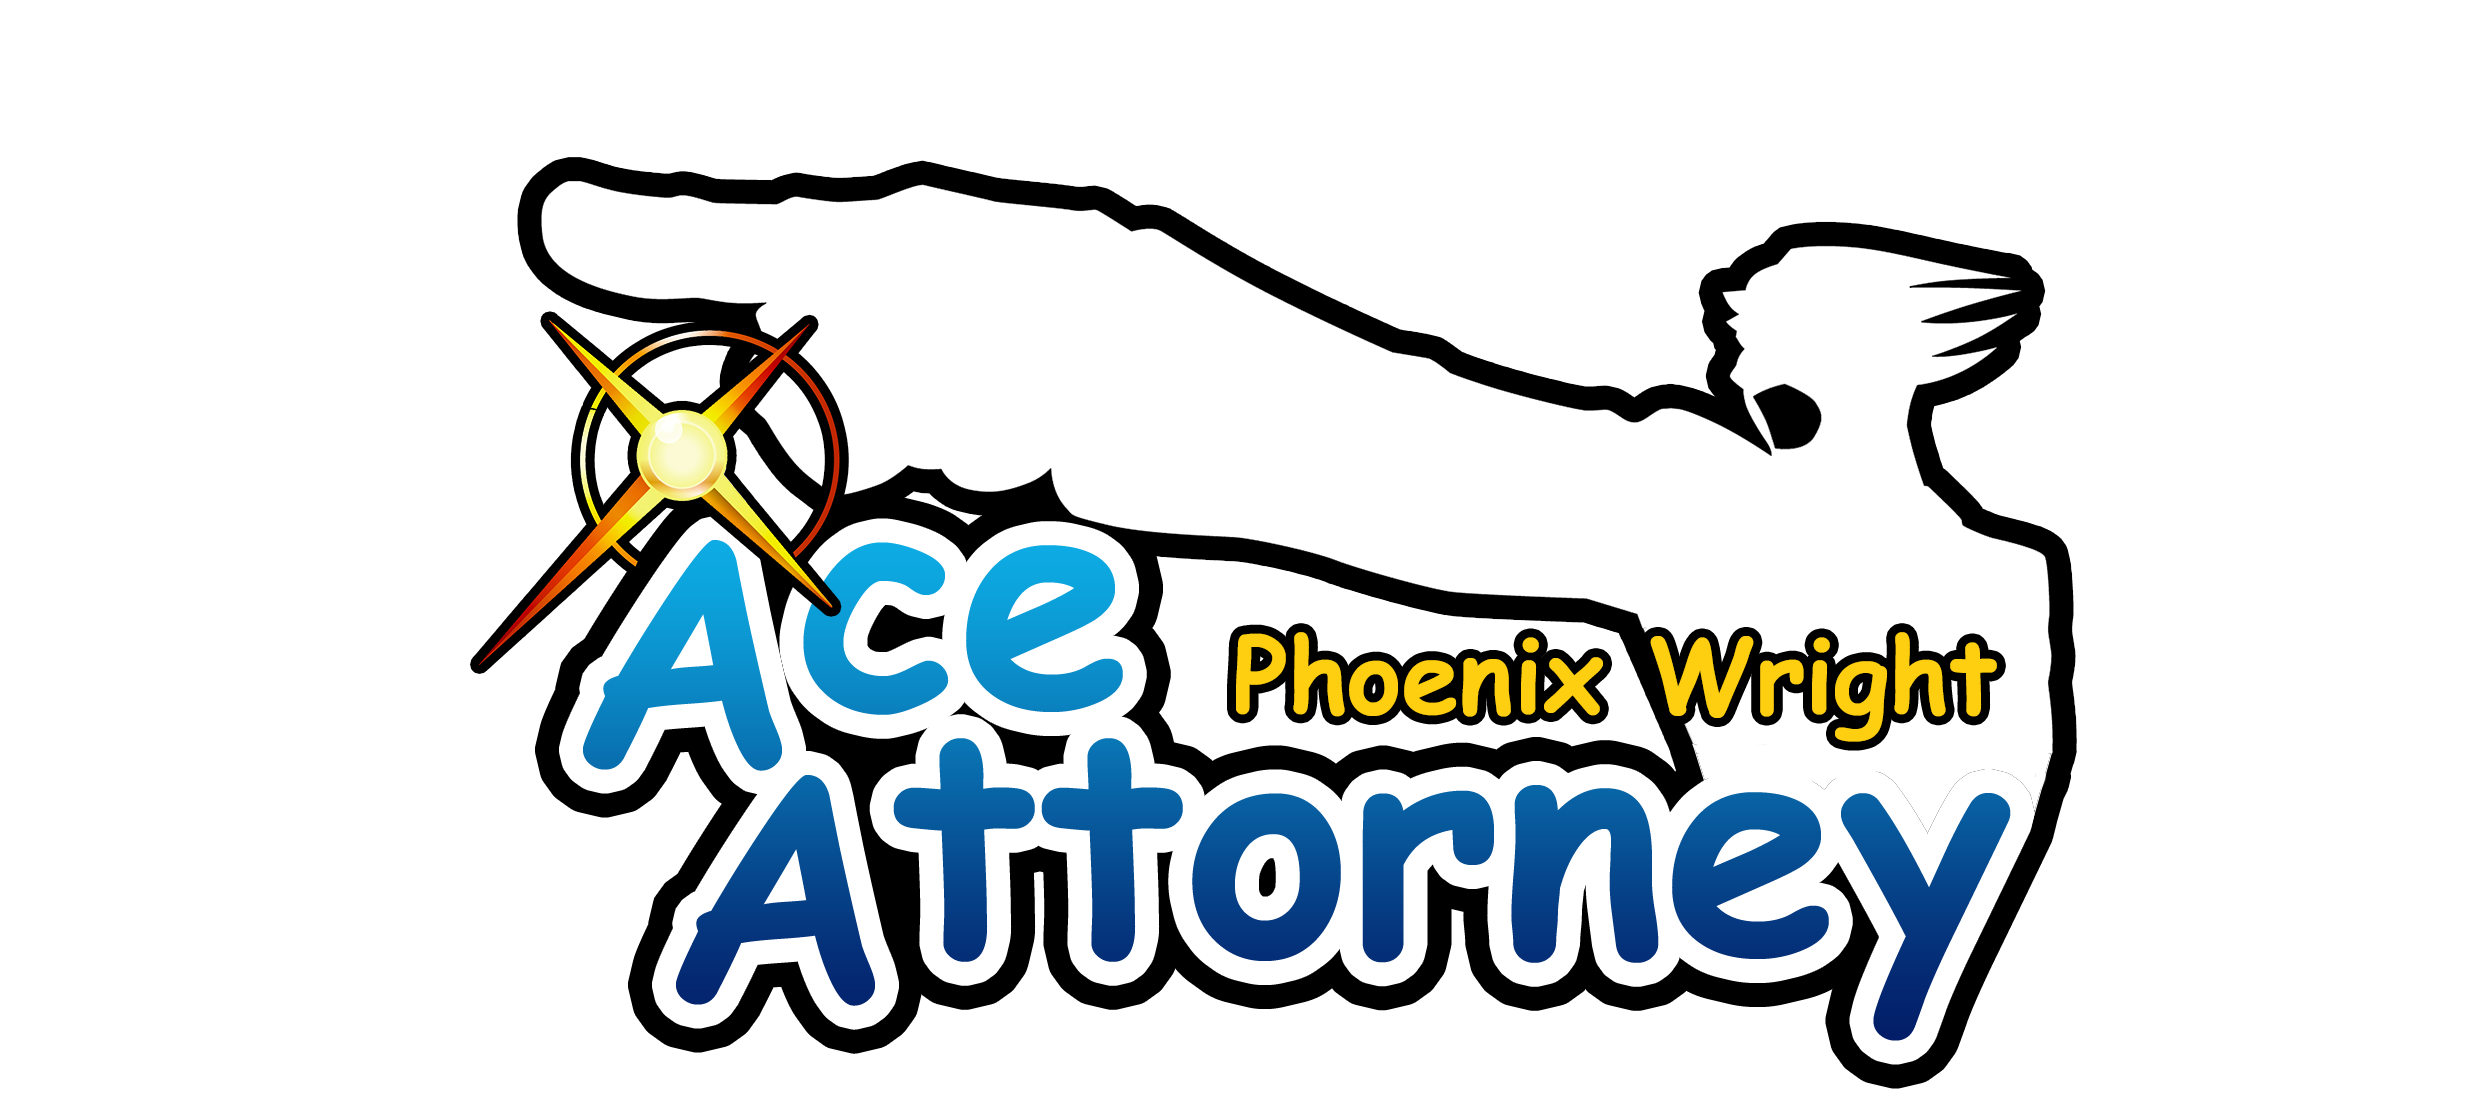 Ace-advocaat-logo PNG Transparant Beeld